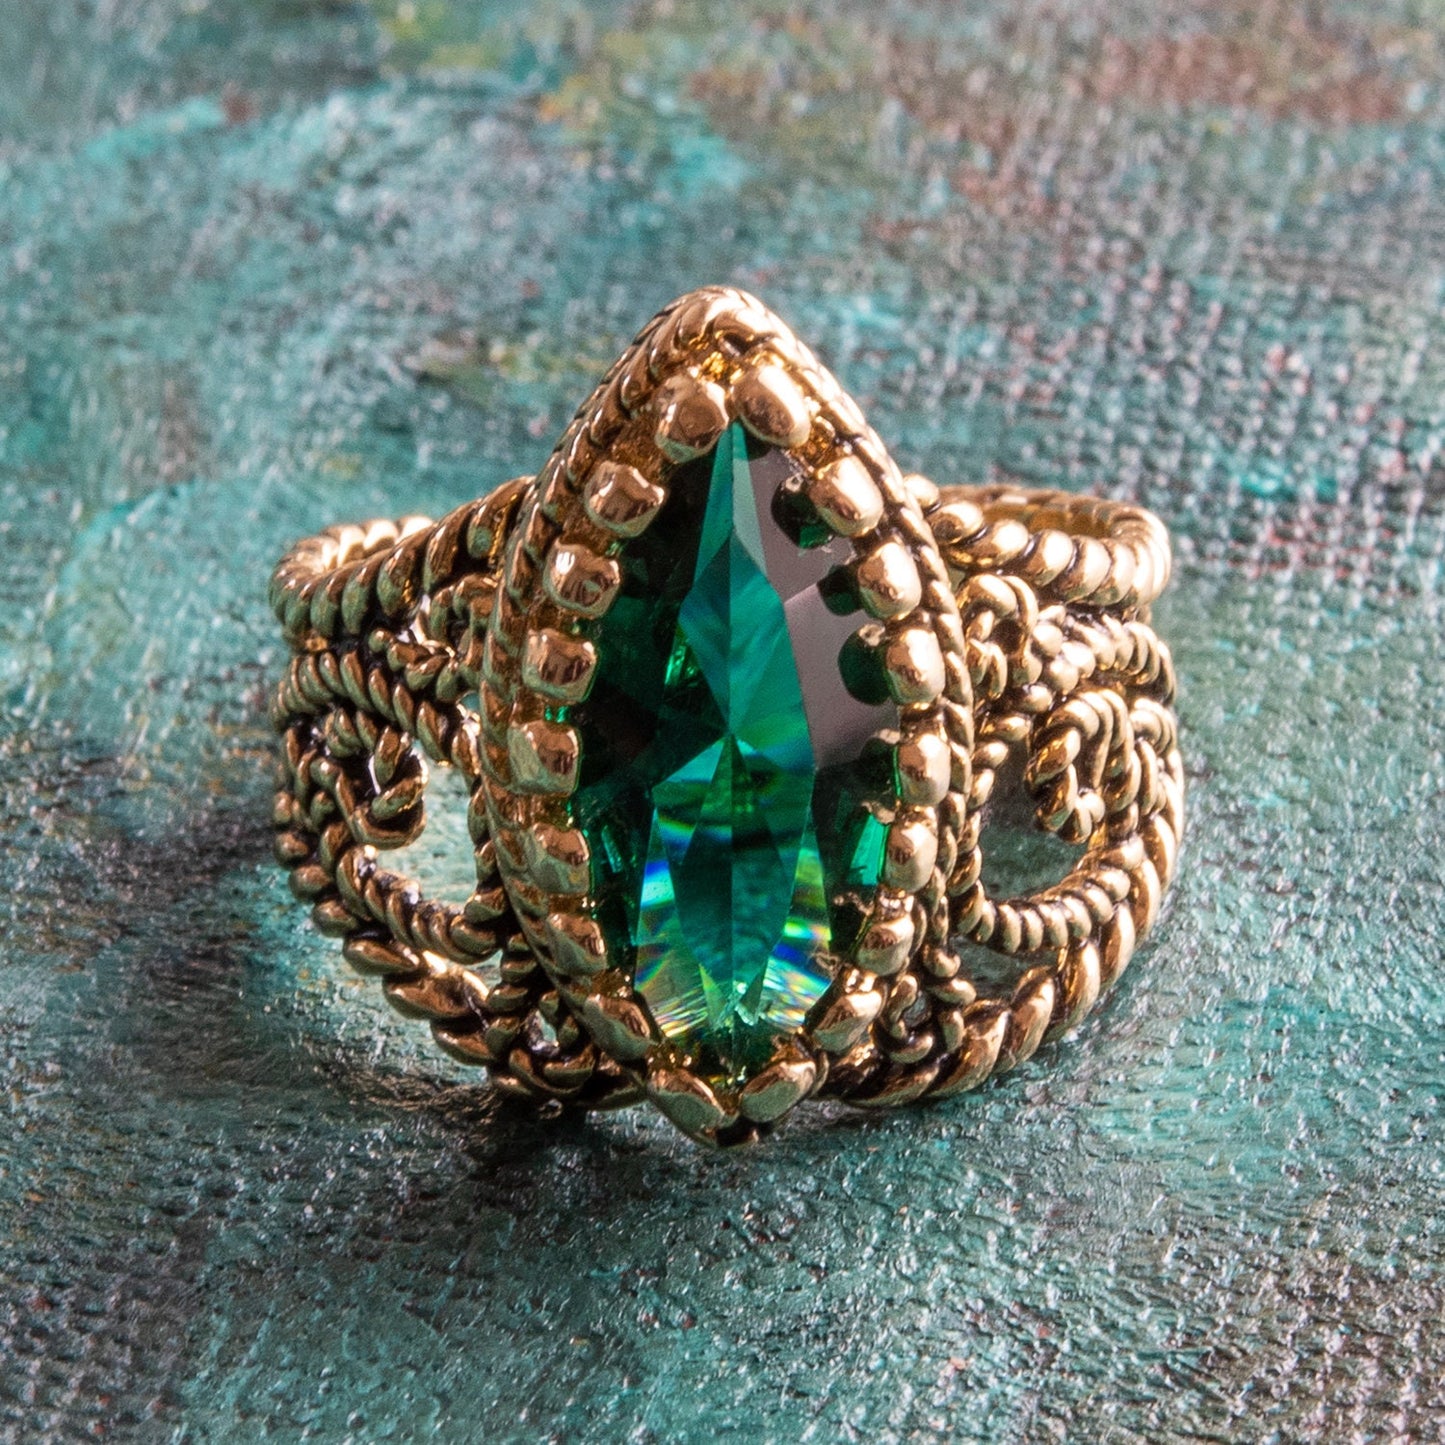 Vintage Ring Emerald Swarovski Crystal Antique 18k Gold Filigree Edwardian Style Womans Victorian Jewelry R1444